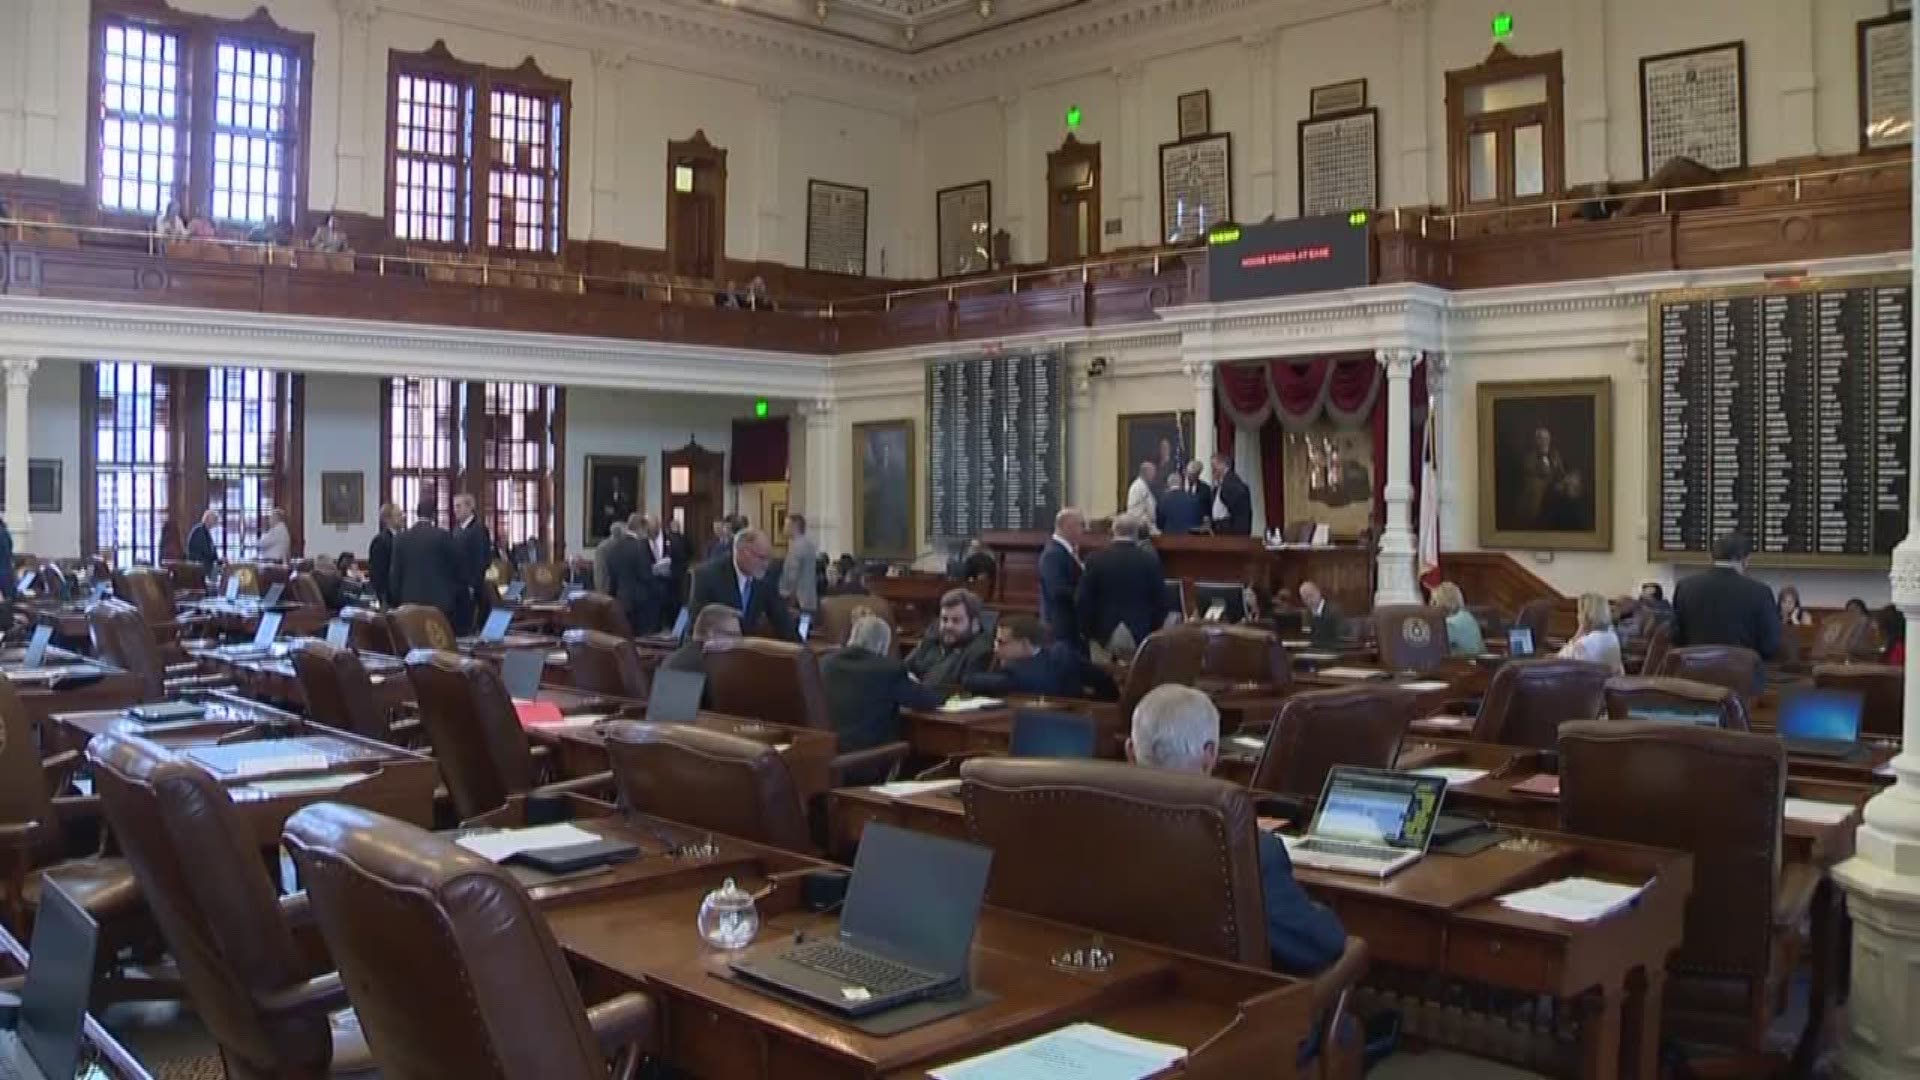 texas legislative session